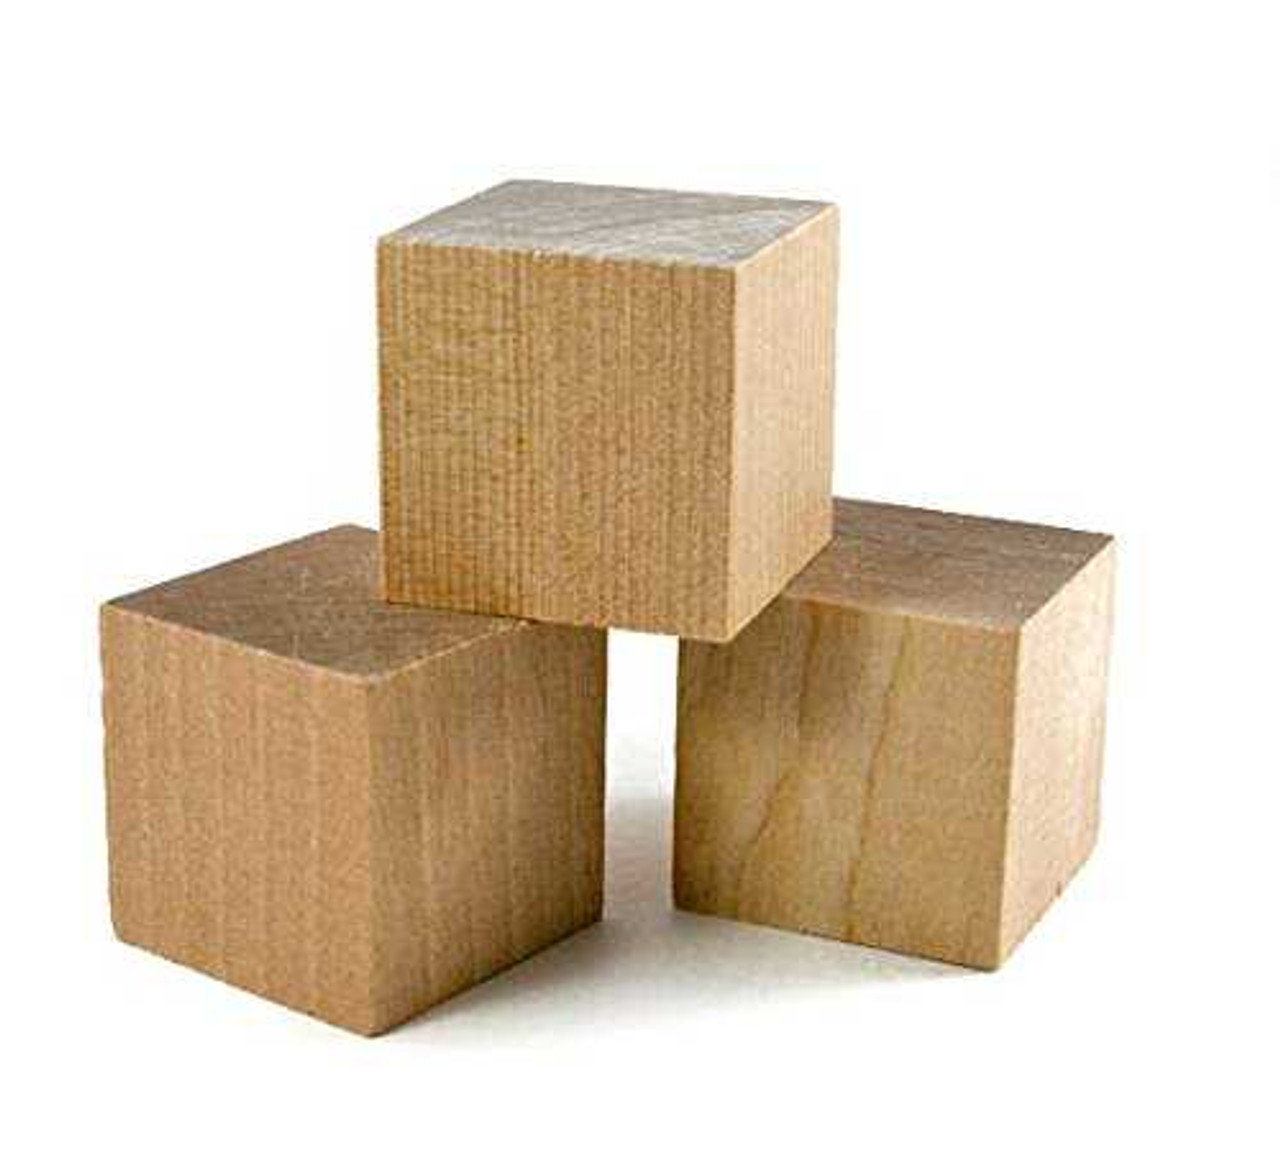 1 Wooden Cubes (40 pcs) - Wooden Blocks